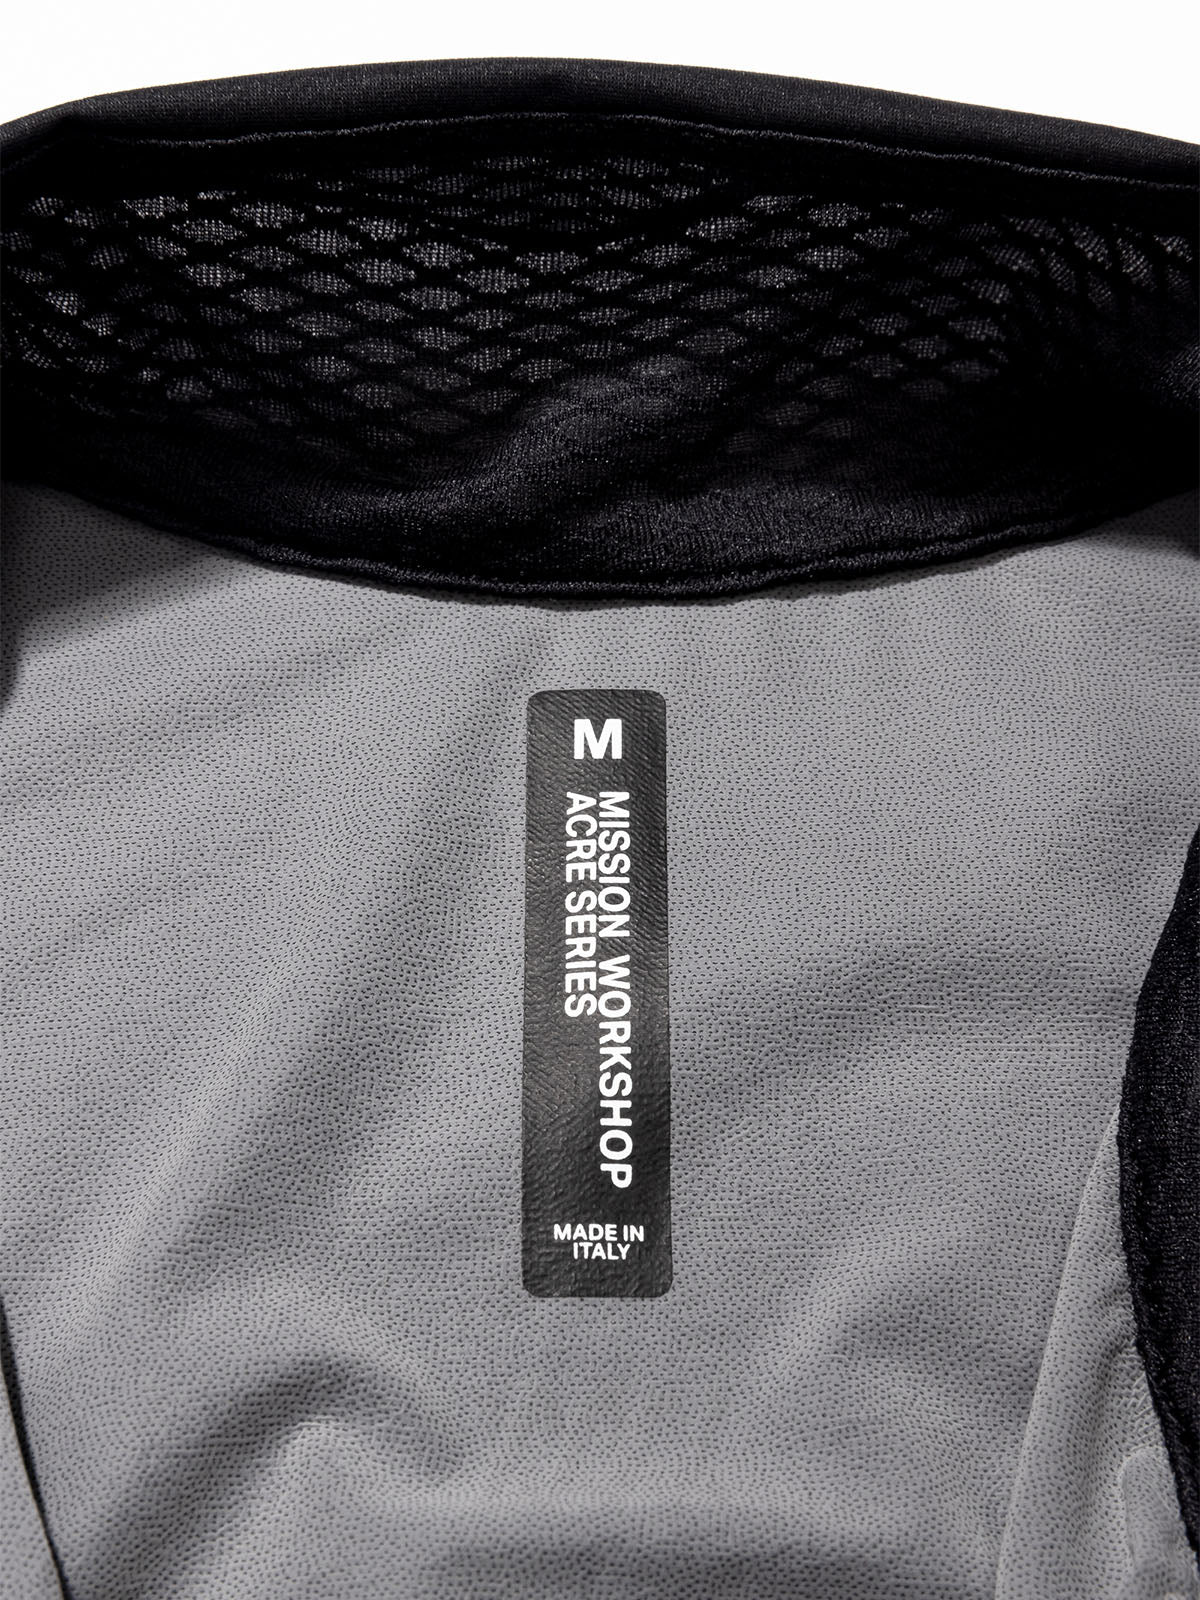 Altosphere Jacket byMission Workshop - 耐候性バッグ＆テクニカルアパレル - サンフランシスコ＆ロサンゼルス - 耐久性に優れた作り - 永久保証